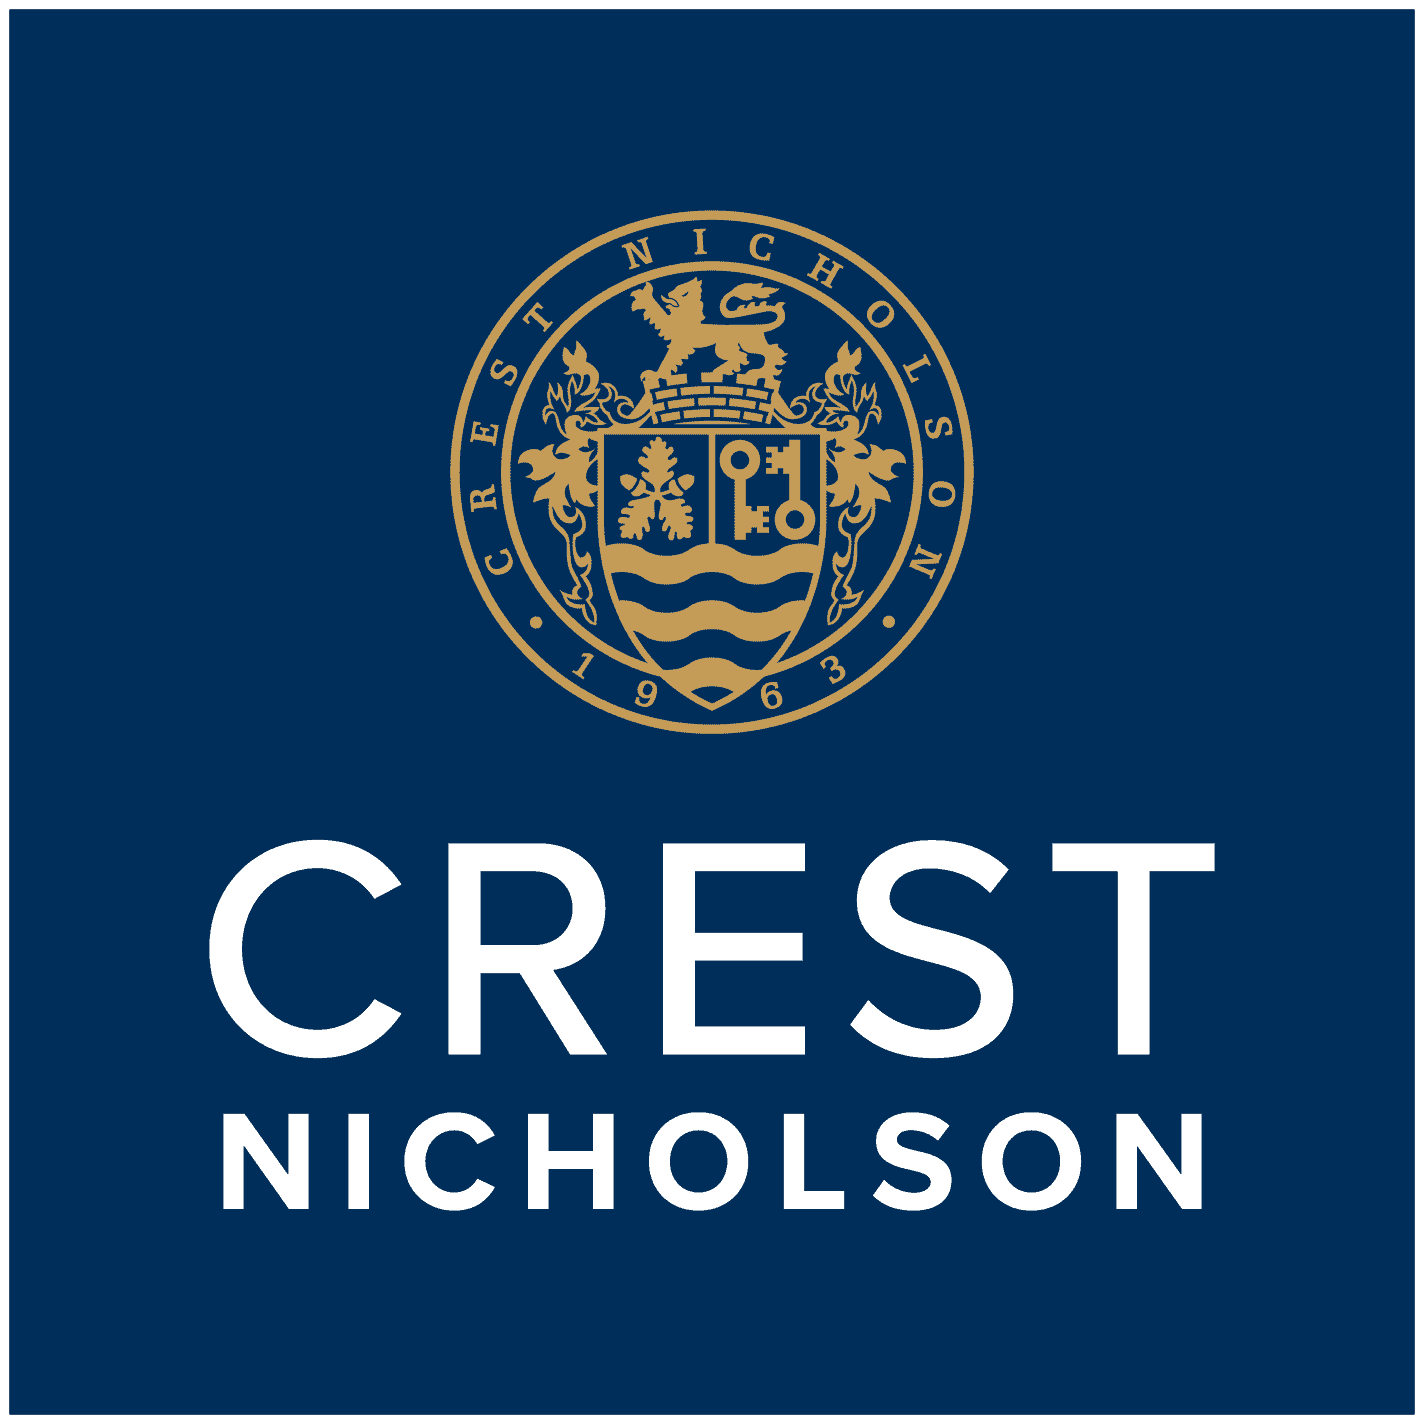 Crest Nicholson Logo png